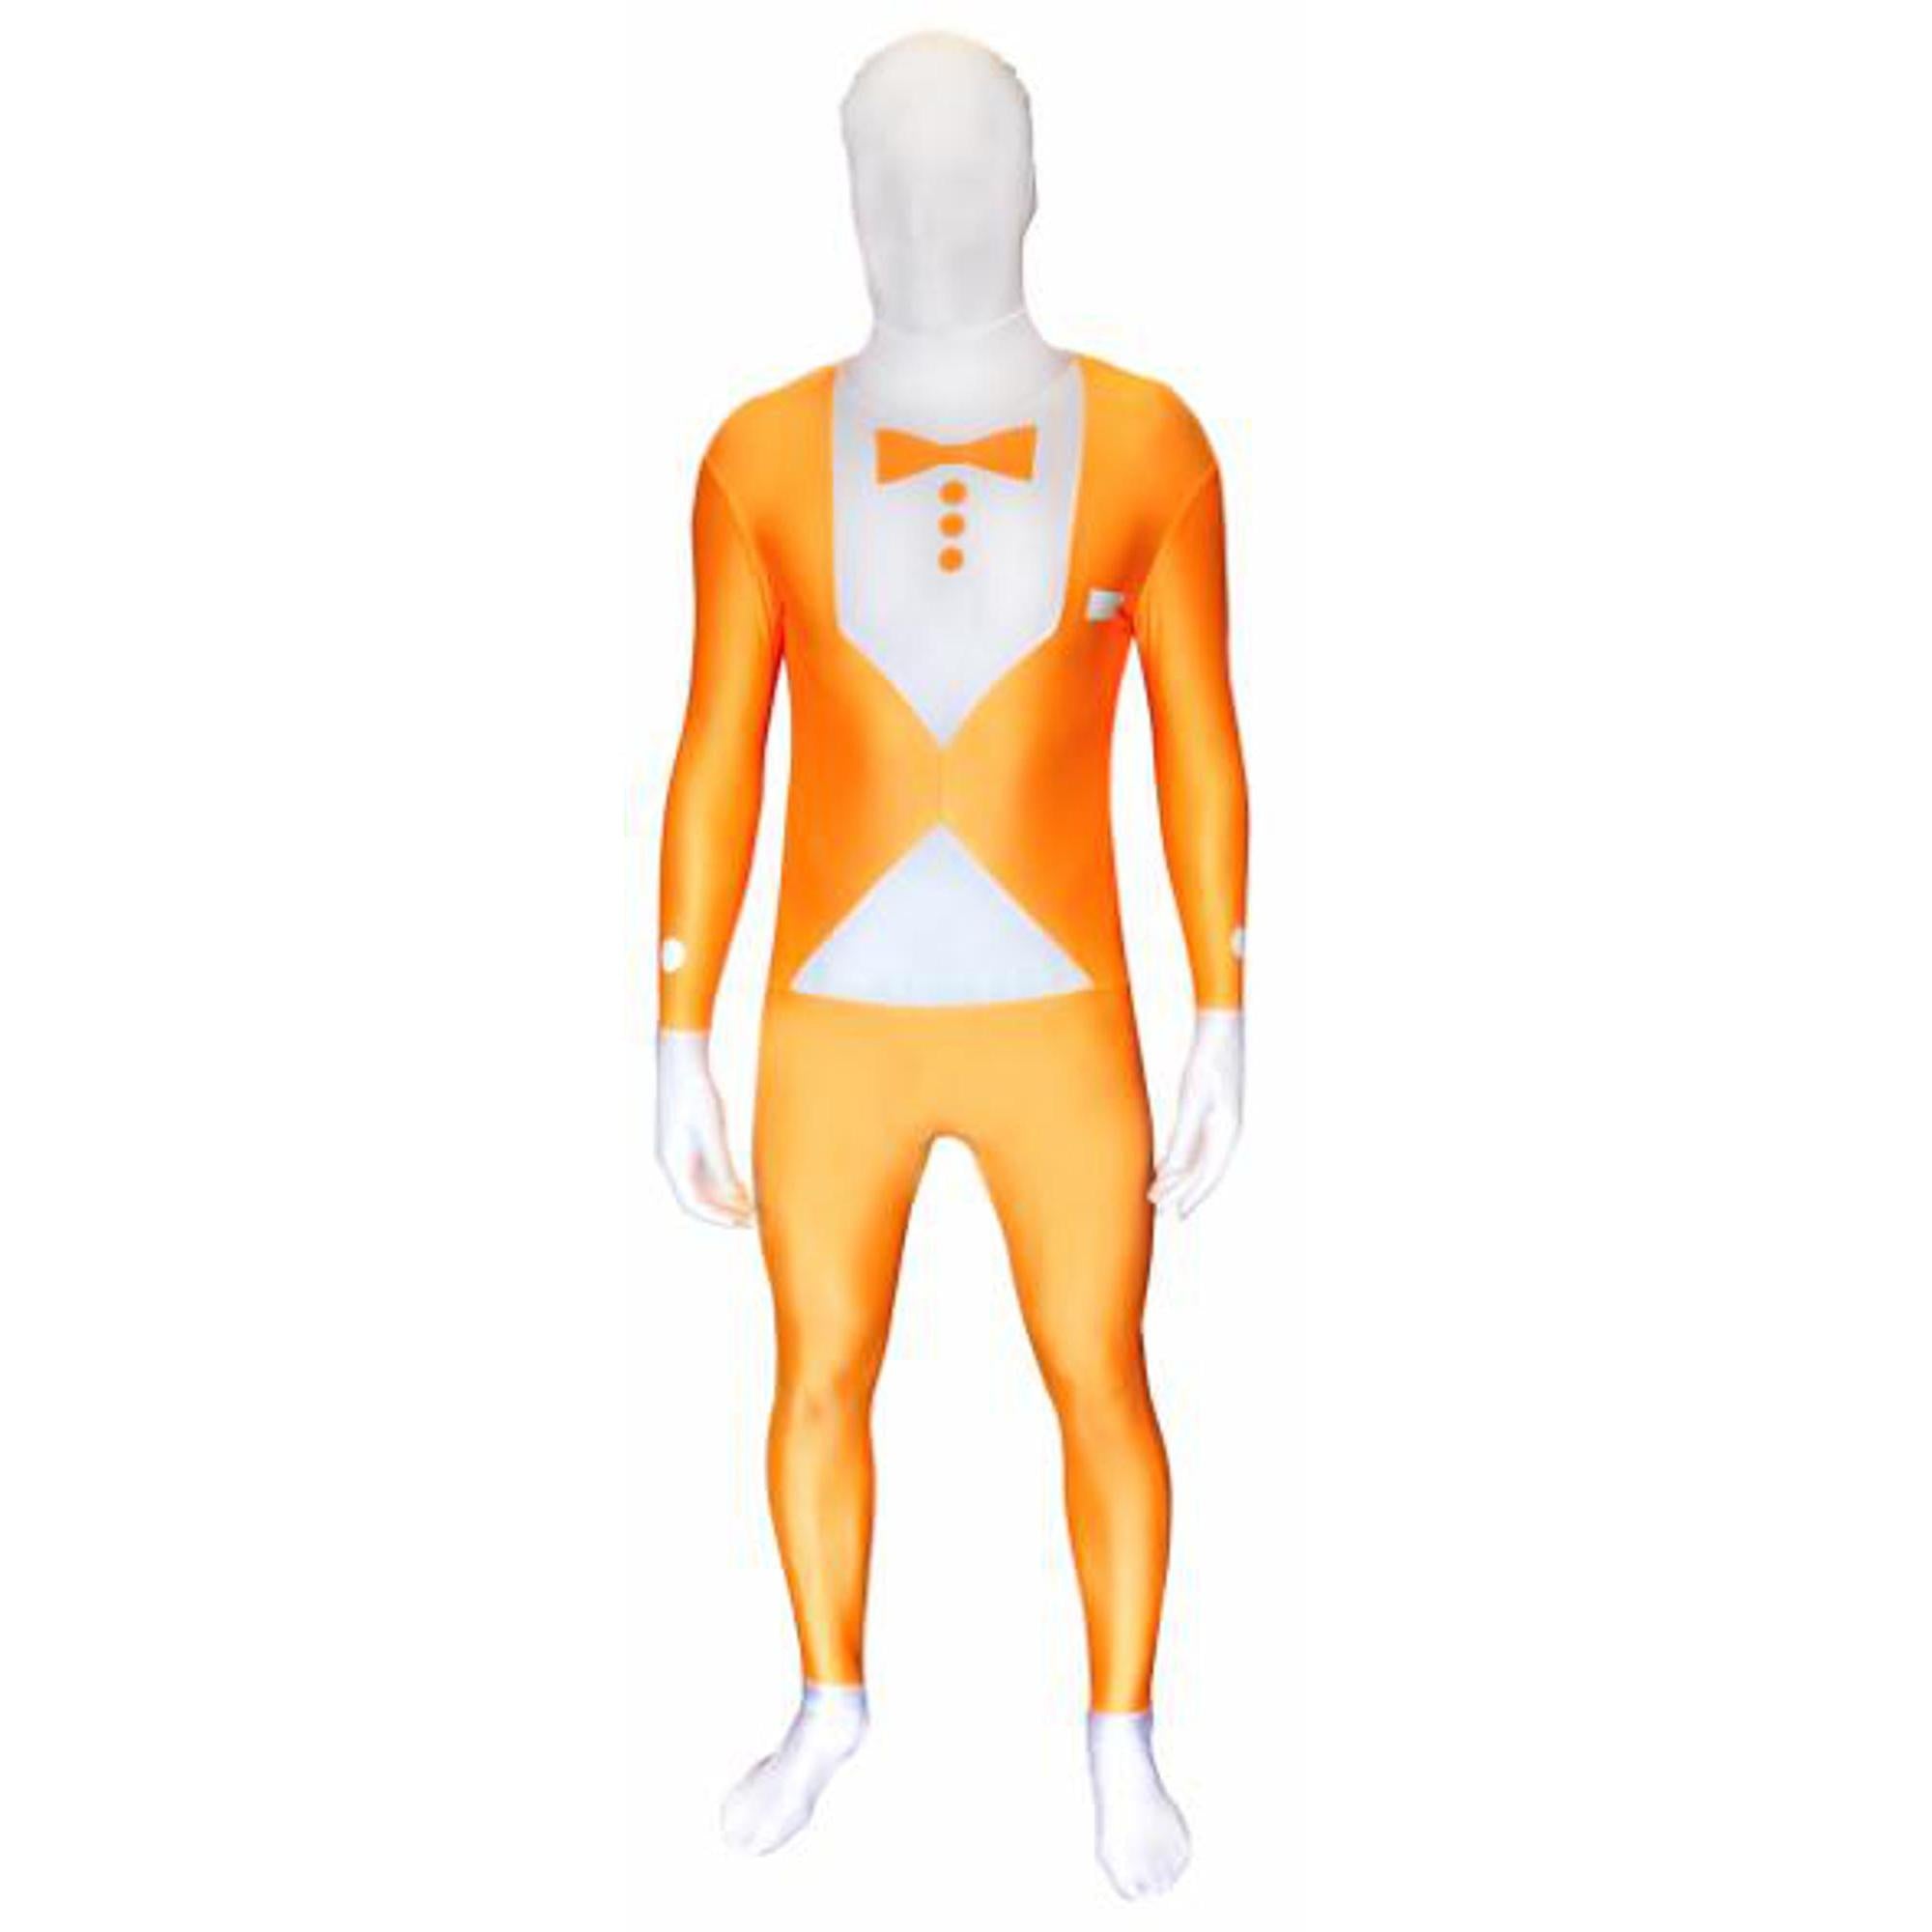 Morphsuit Premium Muscle Medium - Realistic Muscles Costume Suit